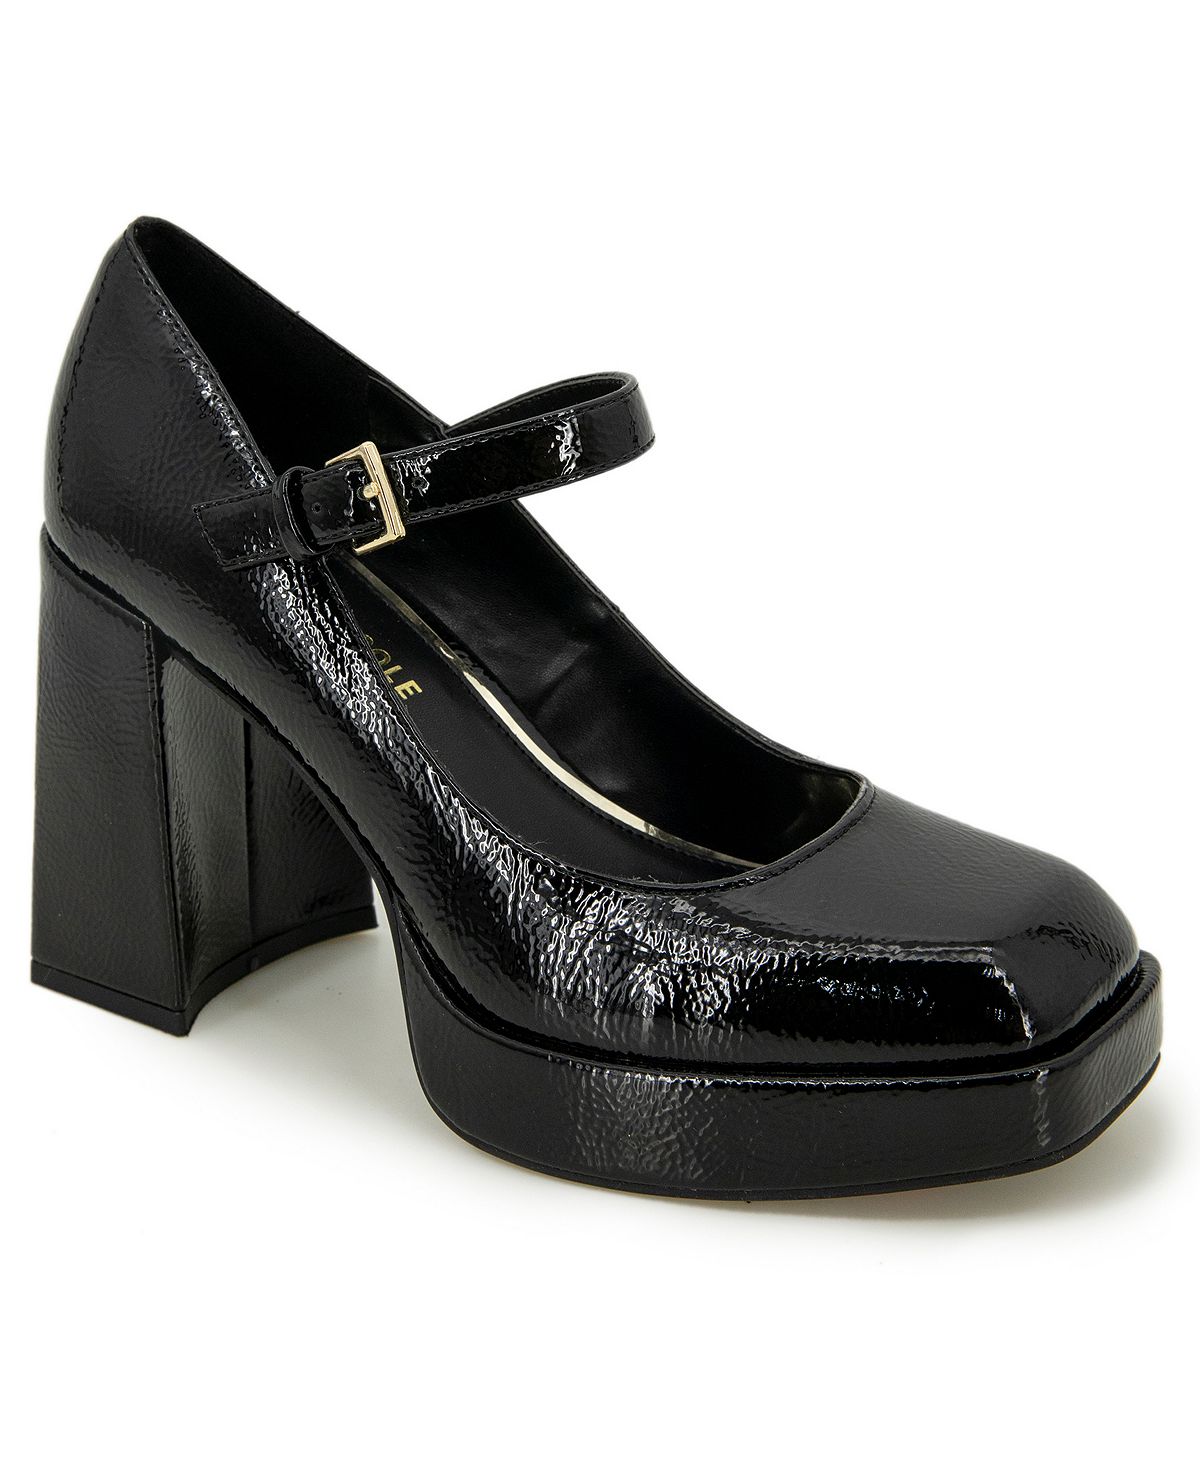 Женские туфли-лодочки на платформе Brynne Kenneth Cole New York, черный